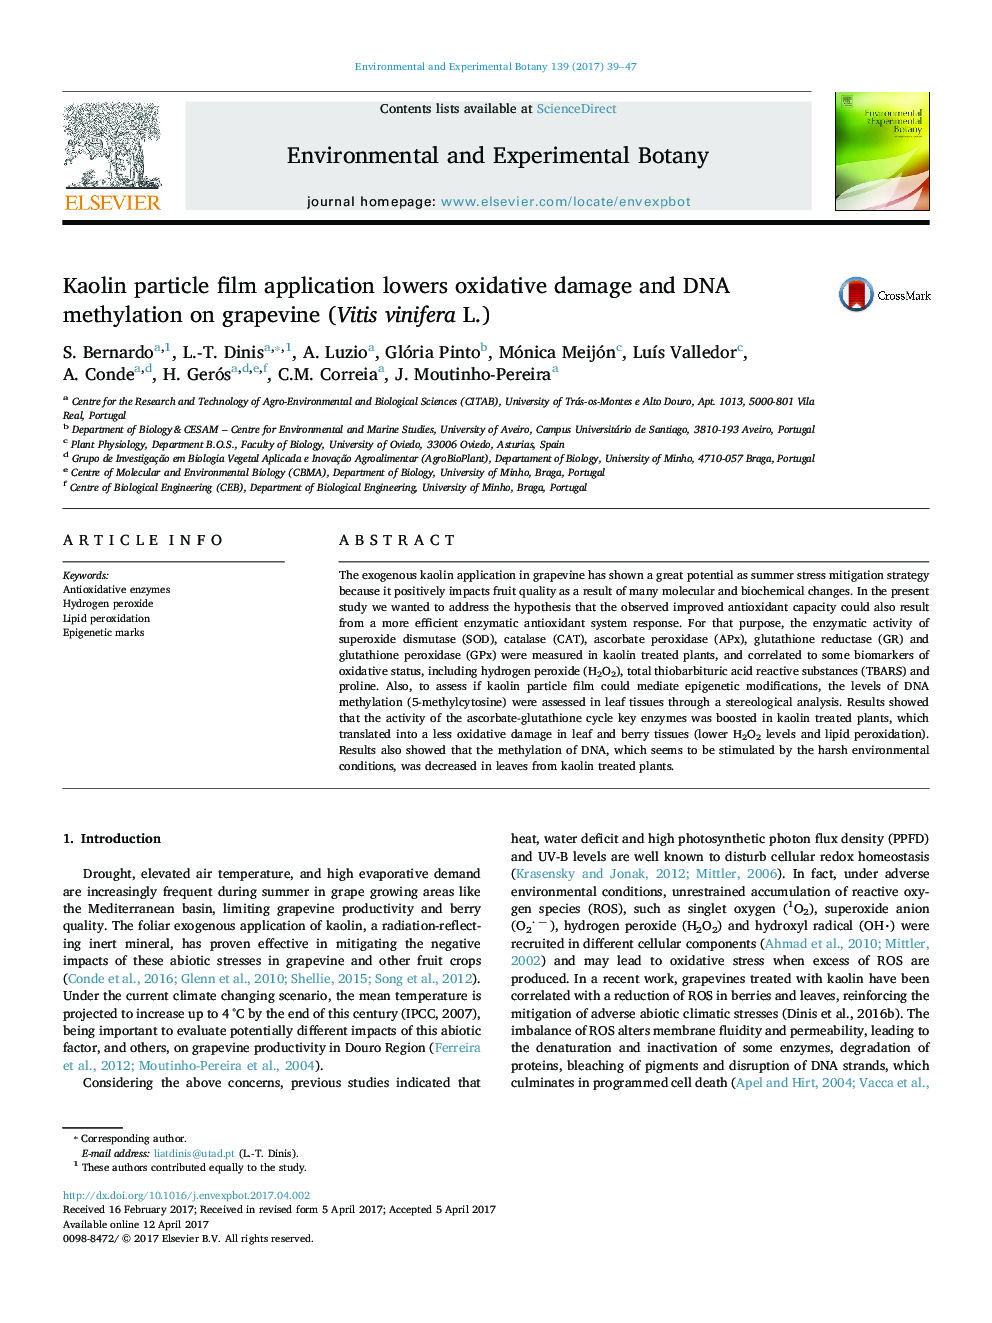 Kaolin particle film application lowers oxidative damage and DNA methylation on grapevine (Vitis vinifera L.)